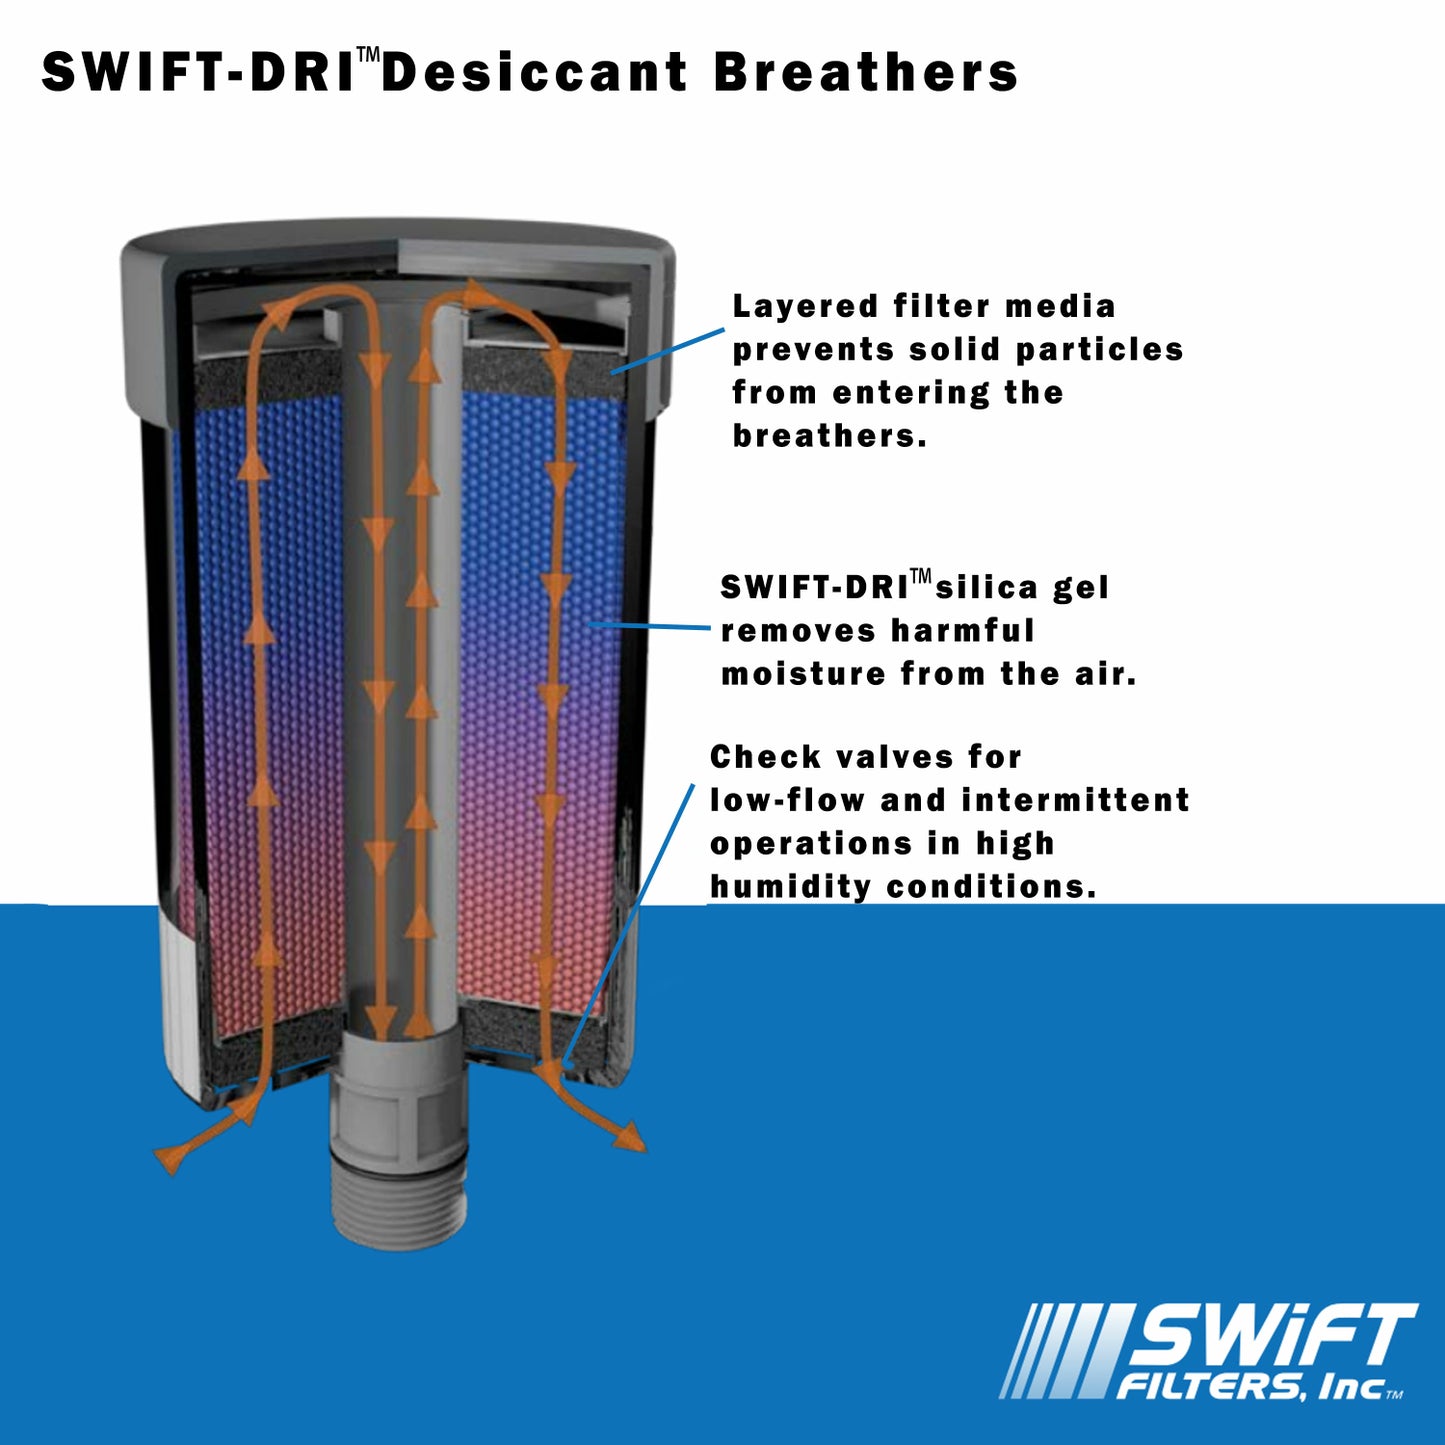 Desiccant Breather SFD-005 Silica Gel Moisture Retention: 1.0 fl. oz.